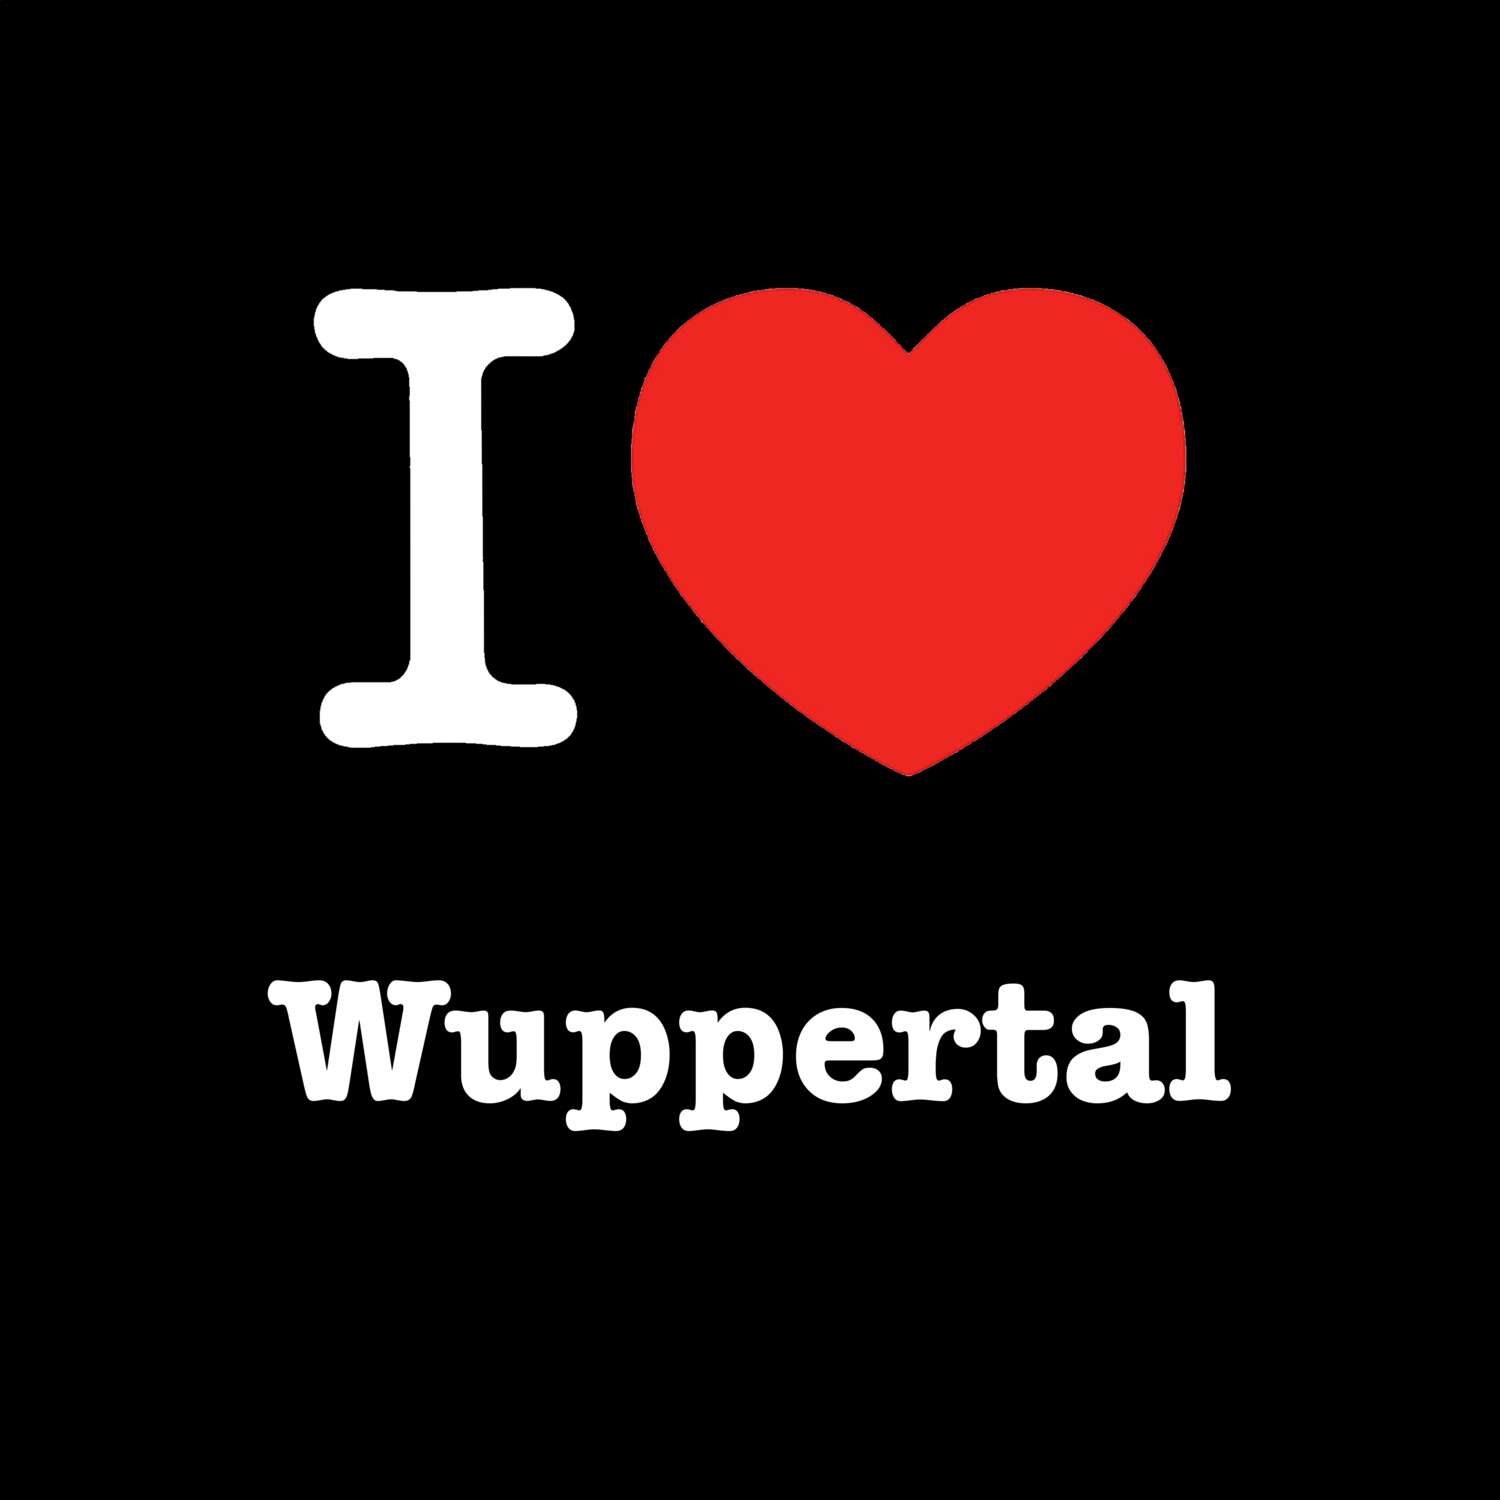 Wuppertal T-Shirt »I love«